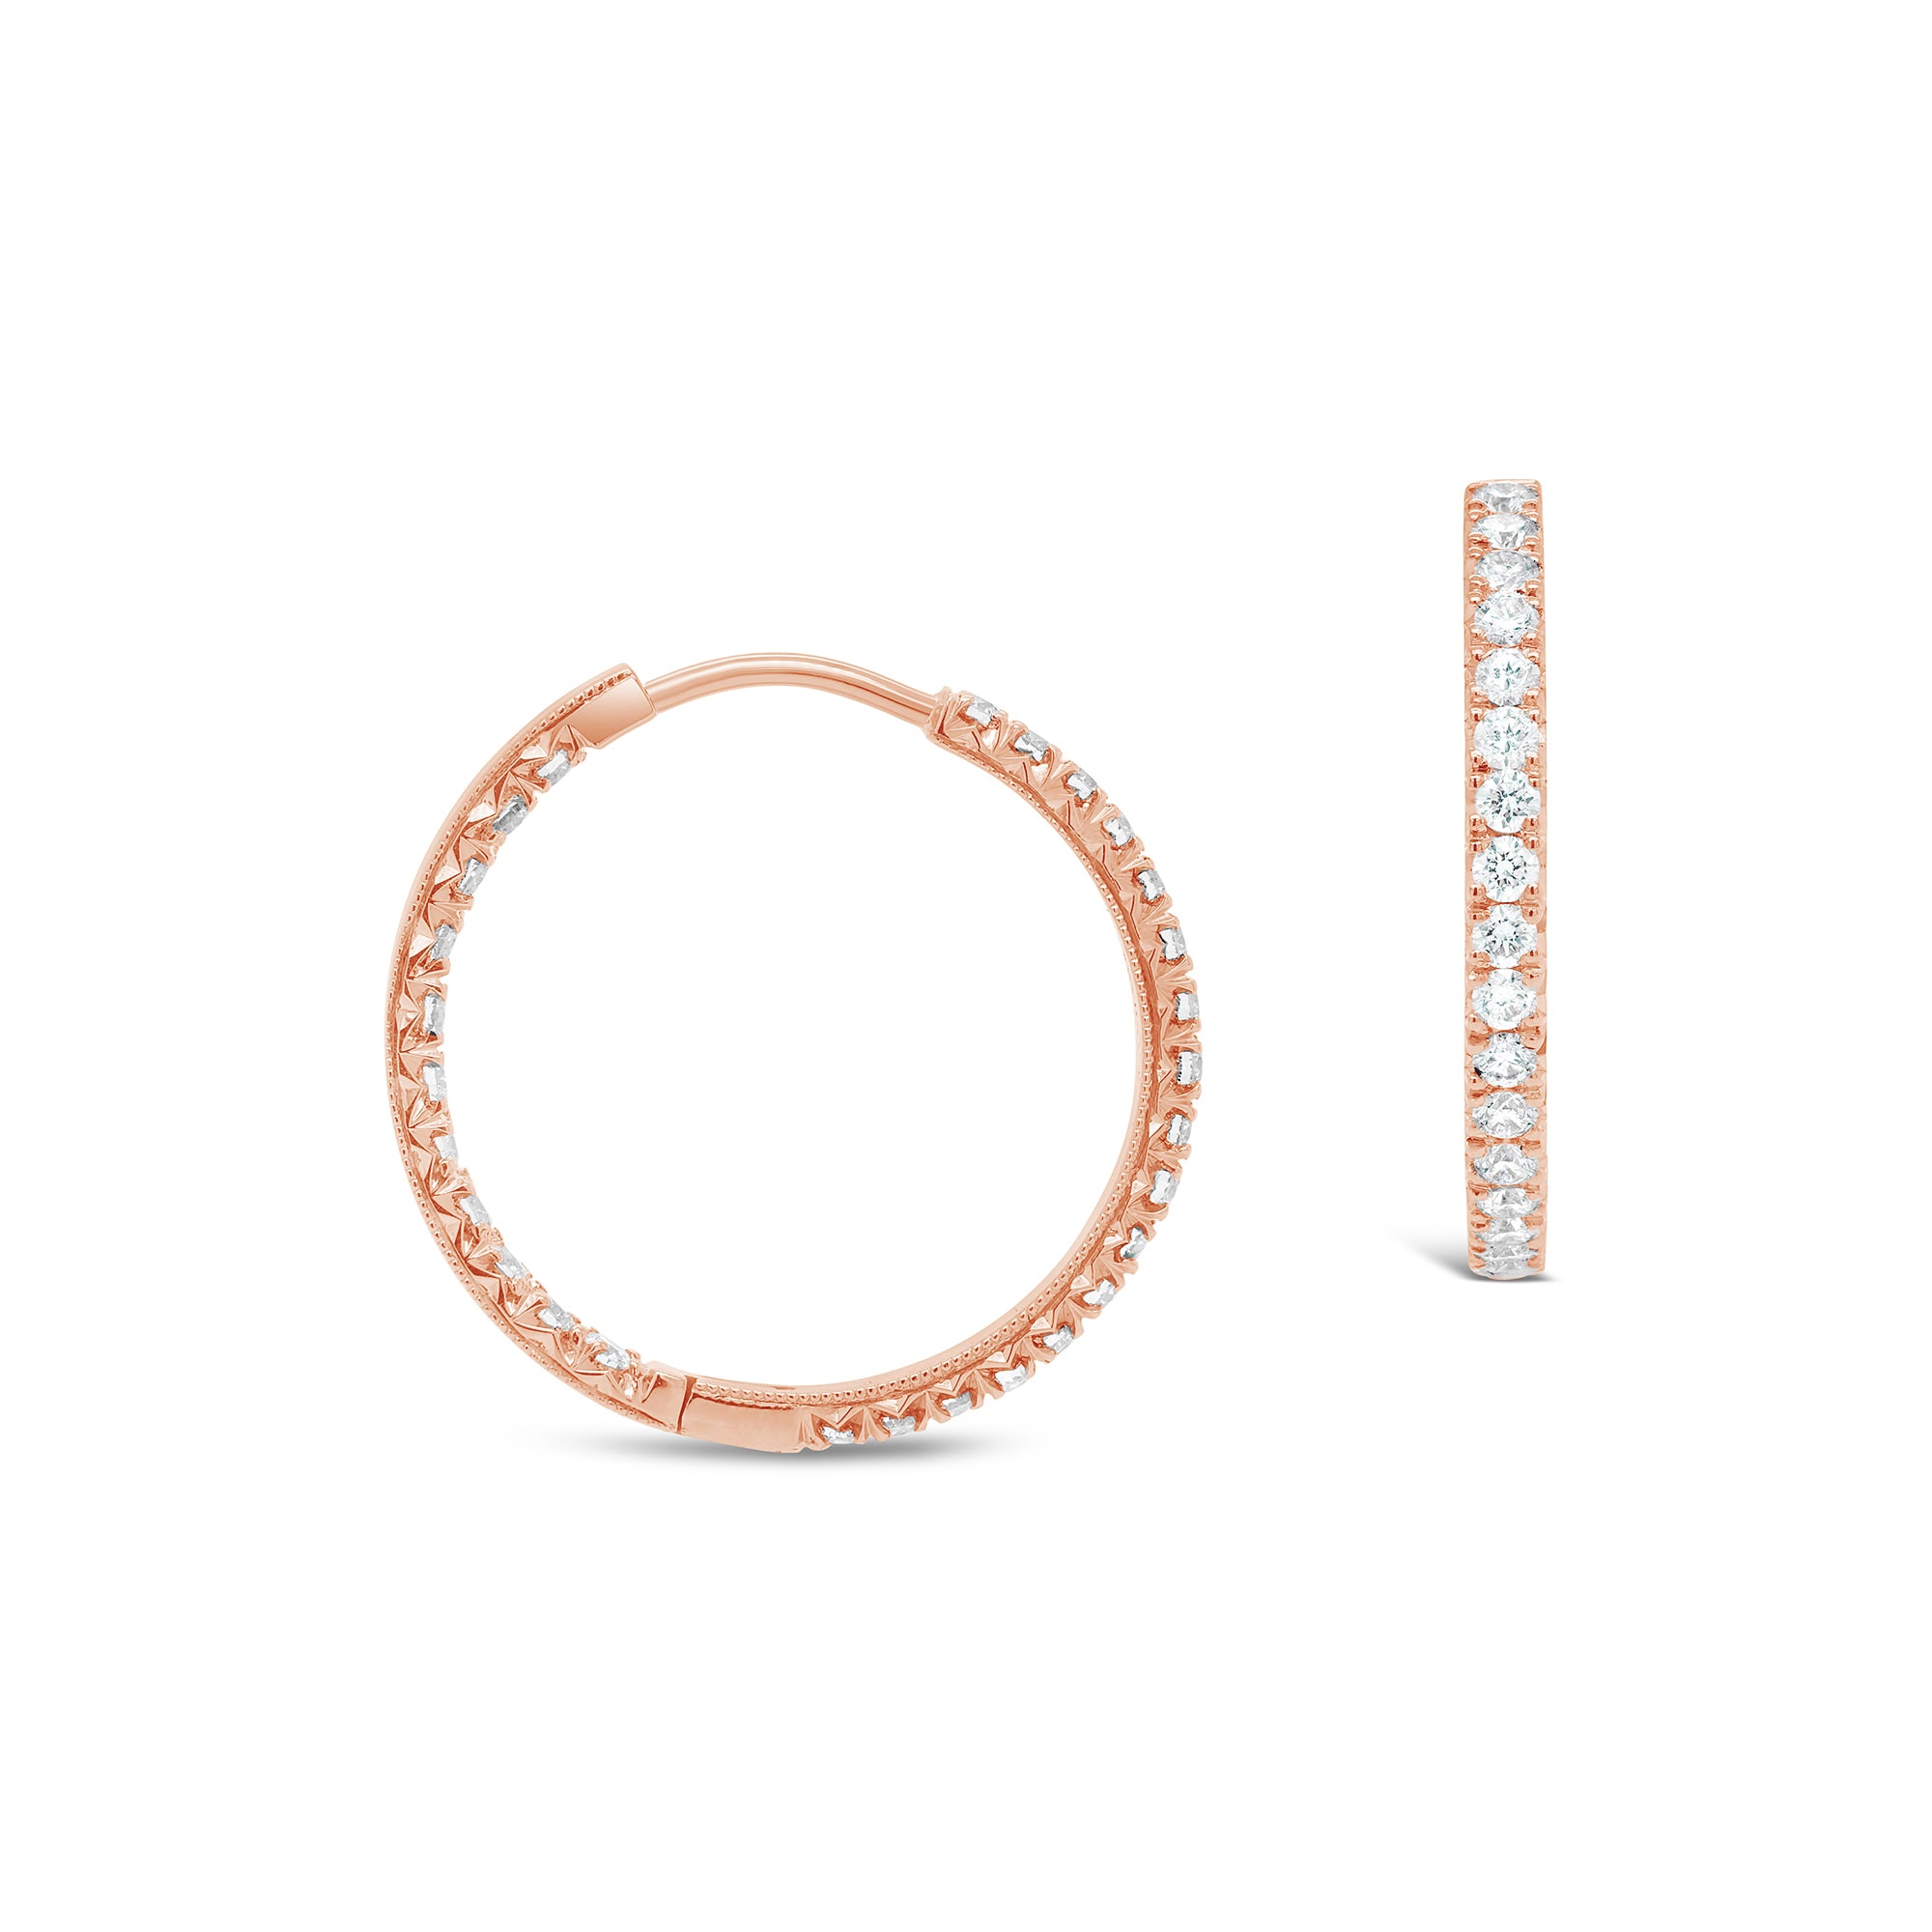 Dovetail-set Round Brilliant Cut Diamond Hoop Earrings - 18ct Rose Gold